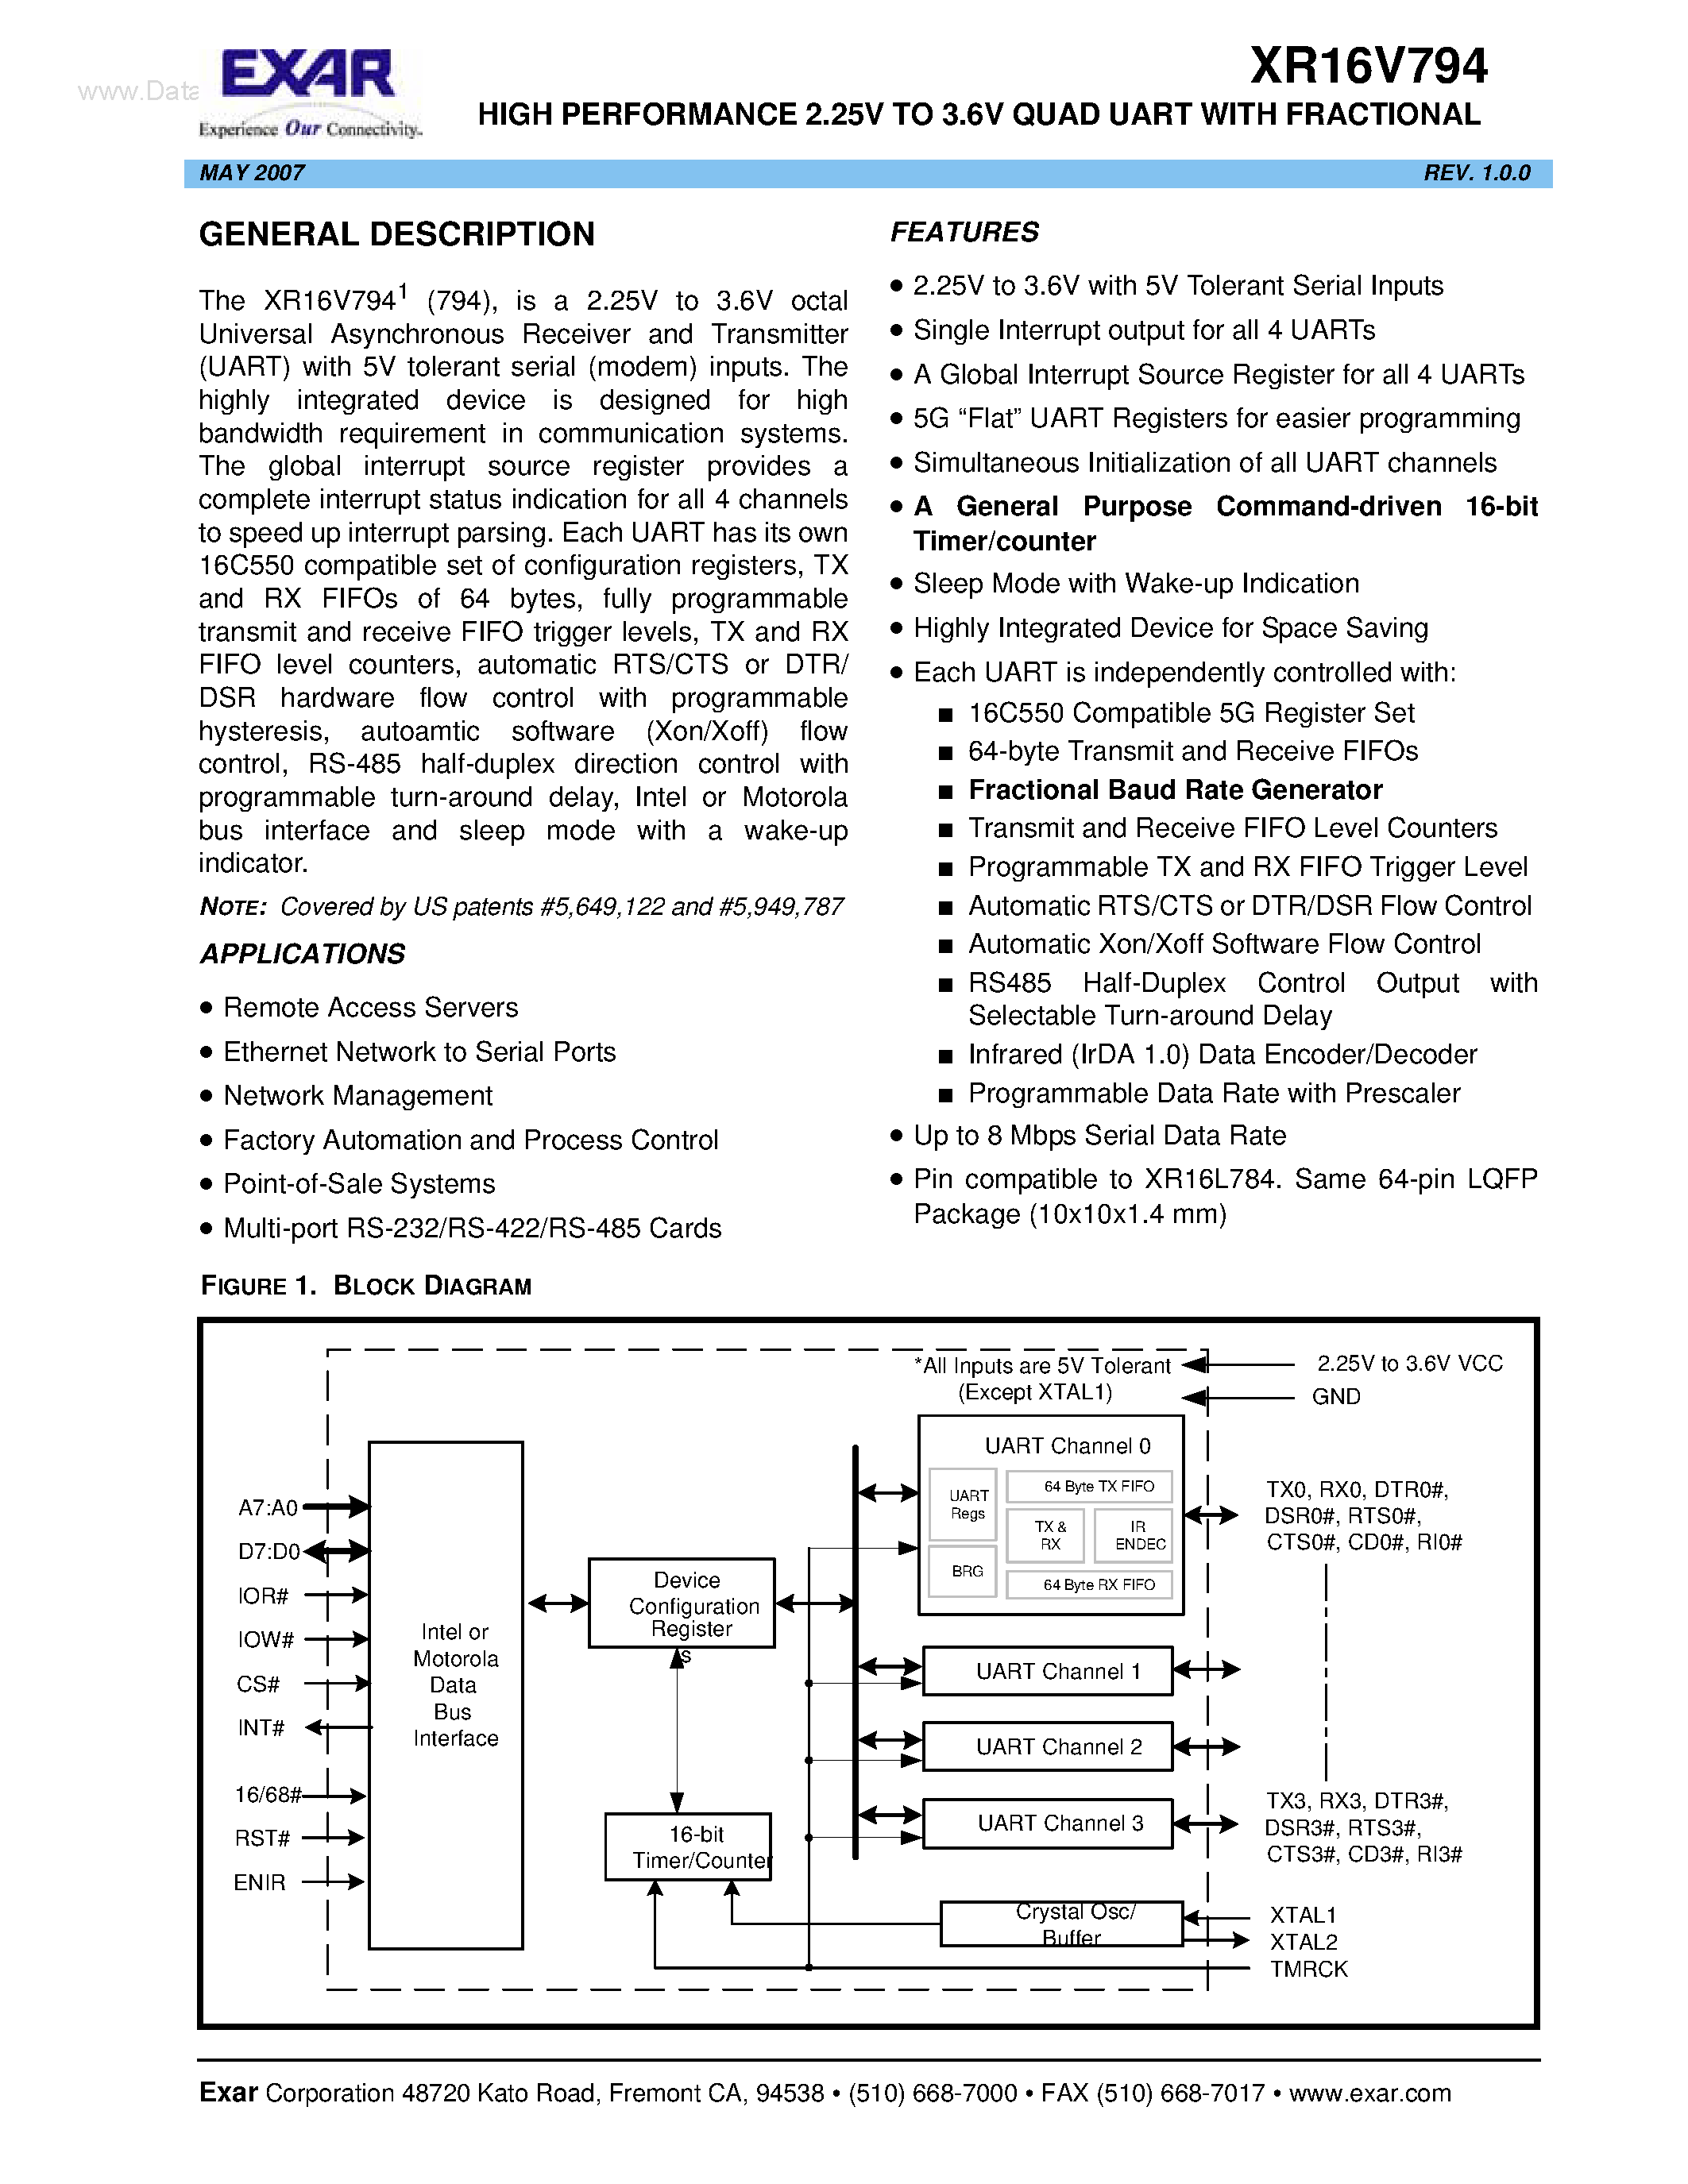 Datasheet XR16V794 - HIGH PERFORMANCE 2.25V TO 3.6V QUAD UART page 1